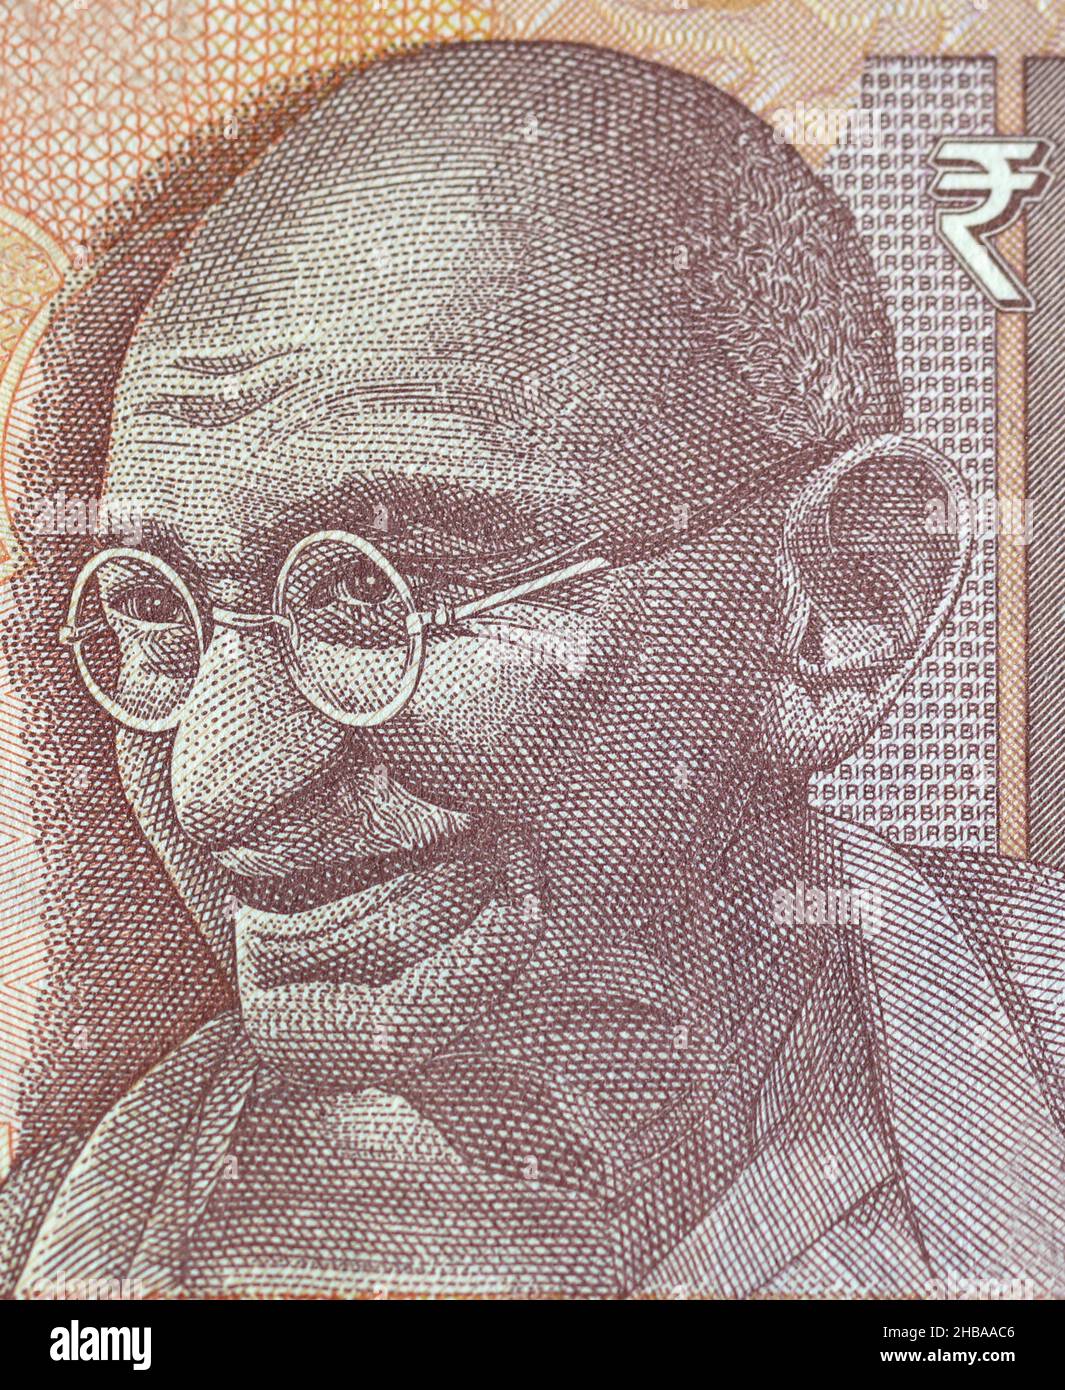 Parte de la nota de la moneda india - un retrato de Mahatma Gandhi, micro detalle Foto de stock